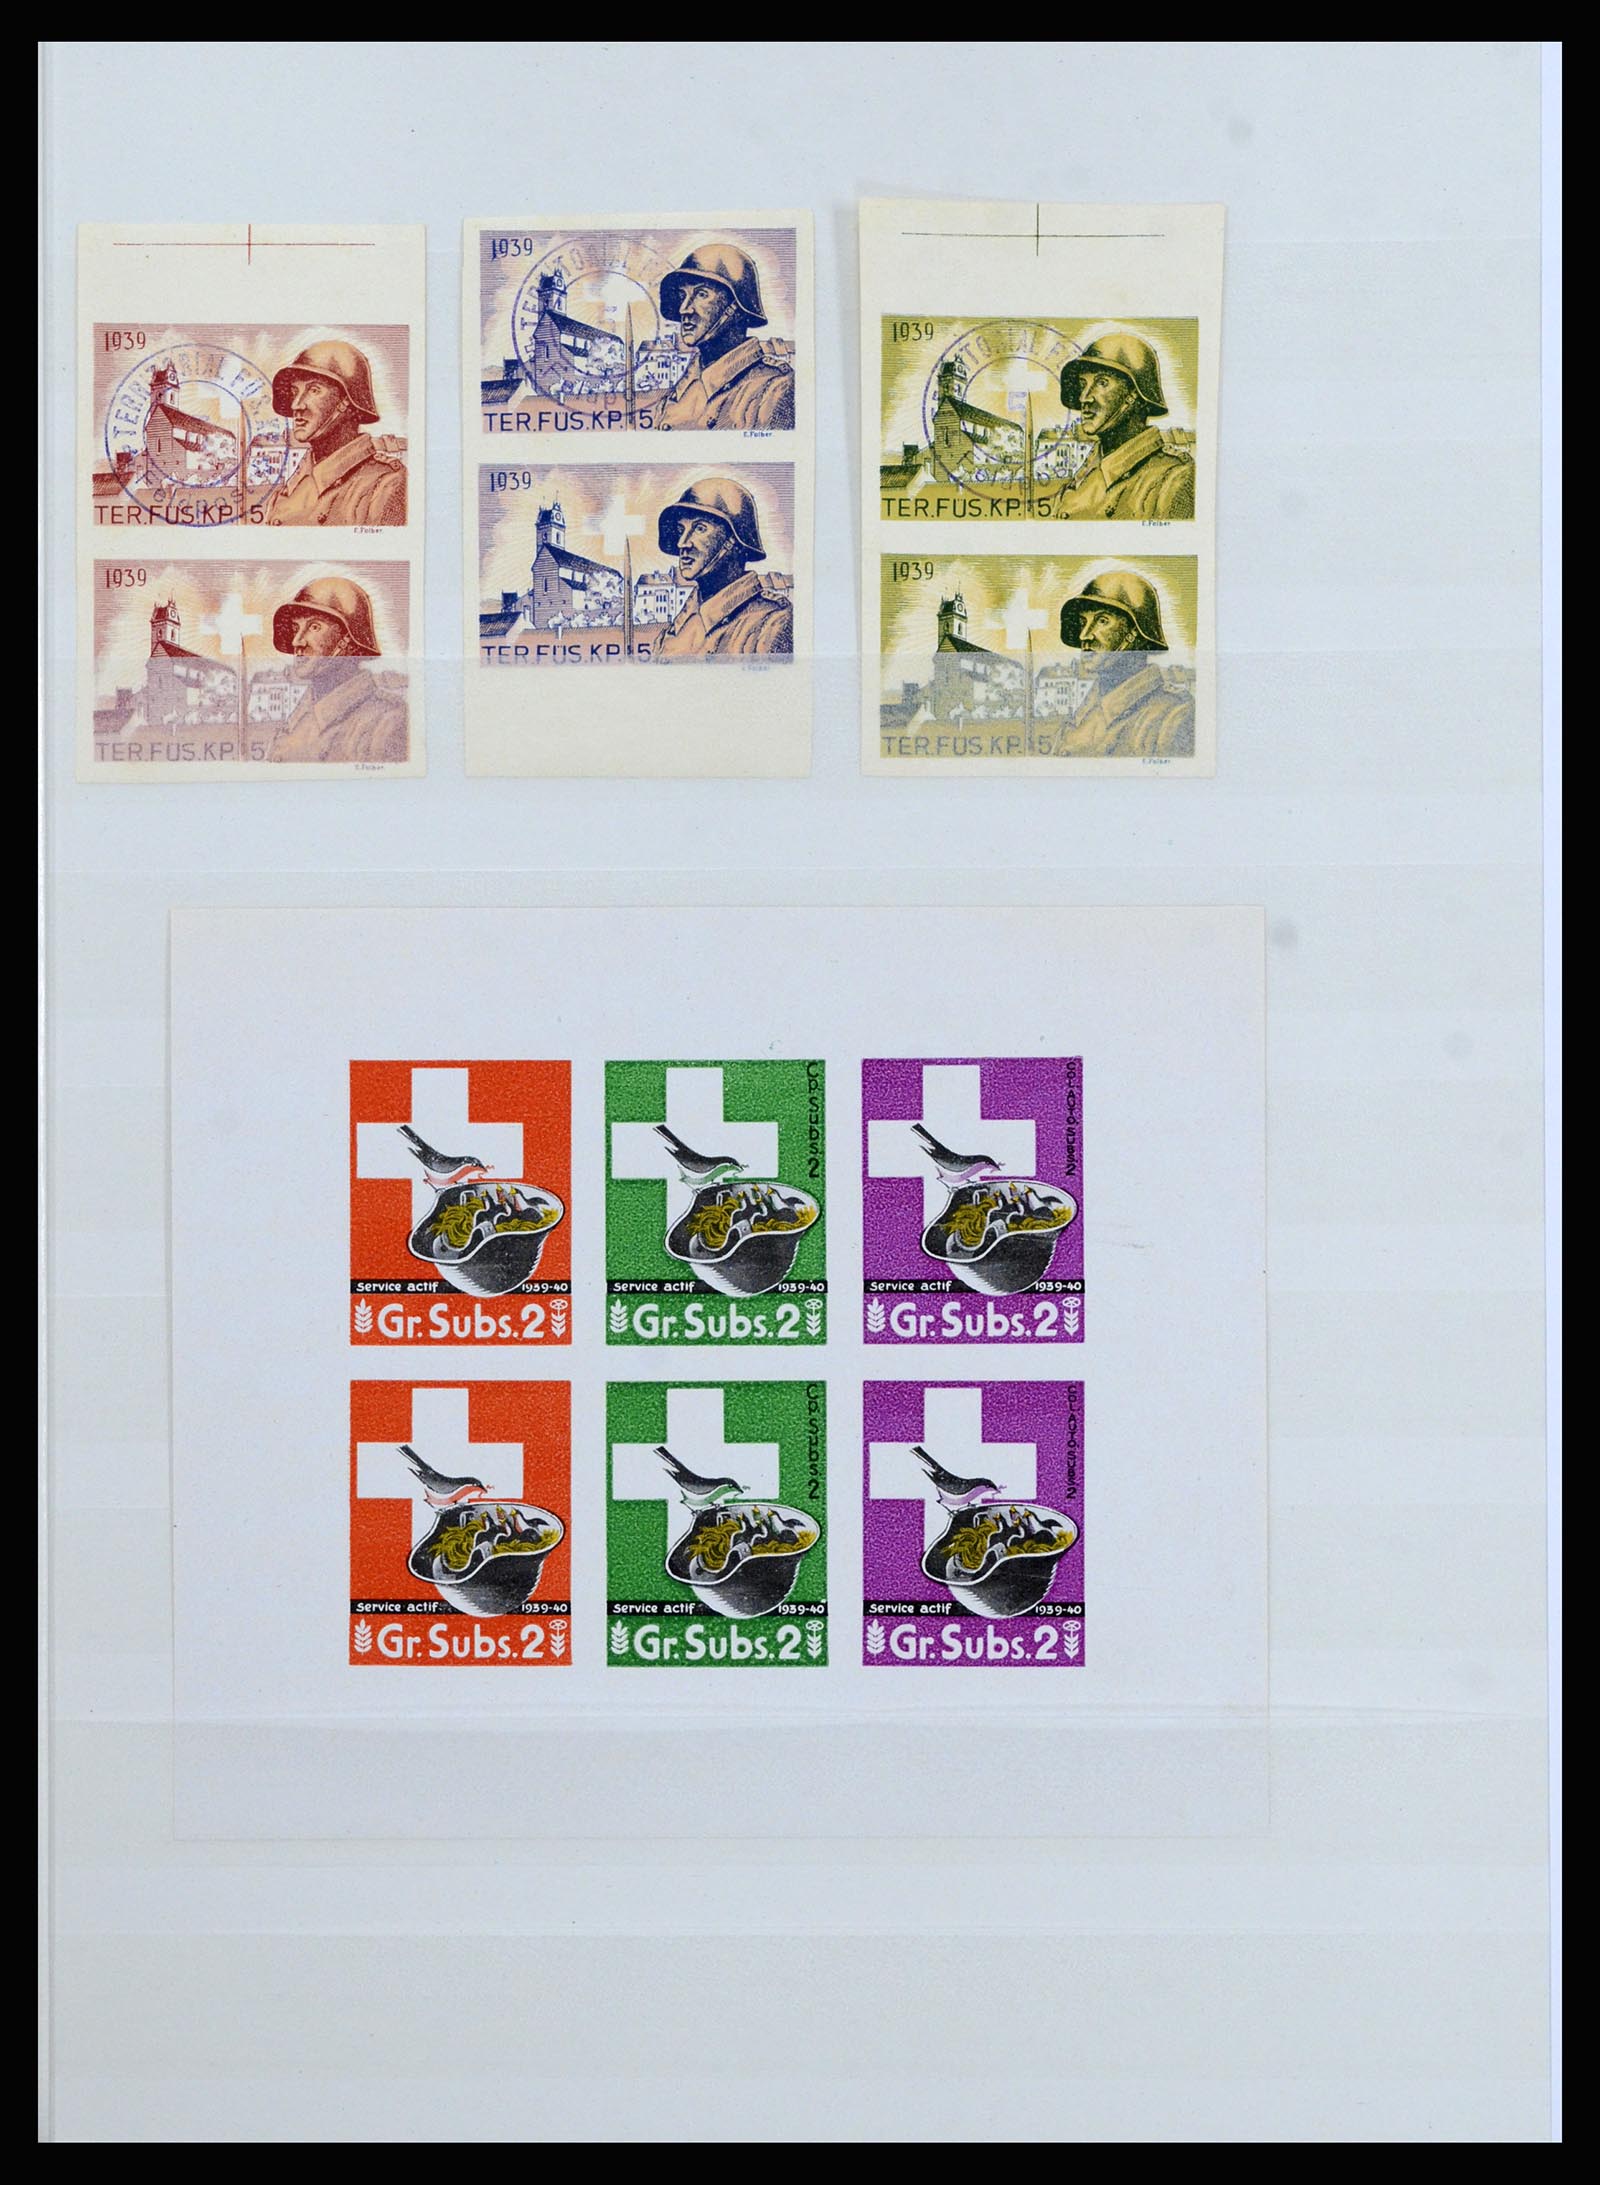 37149 019 - Stamp collection 37149 Switzerland soldier stamps 1914-1945.